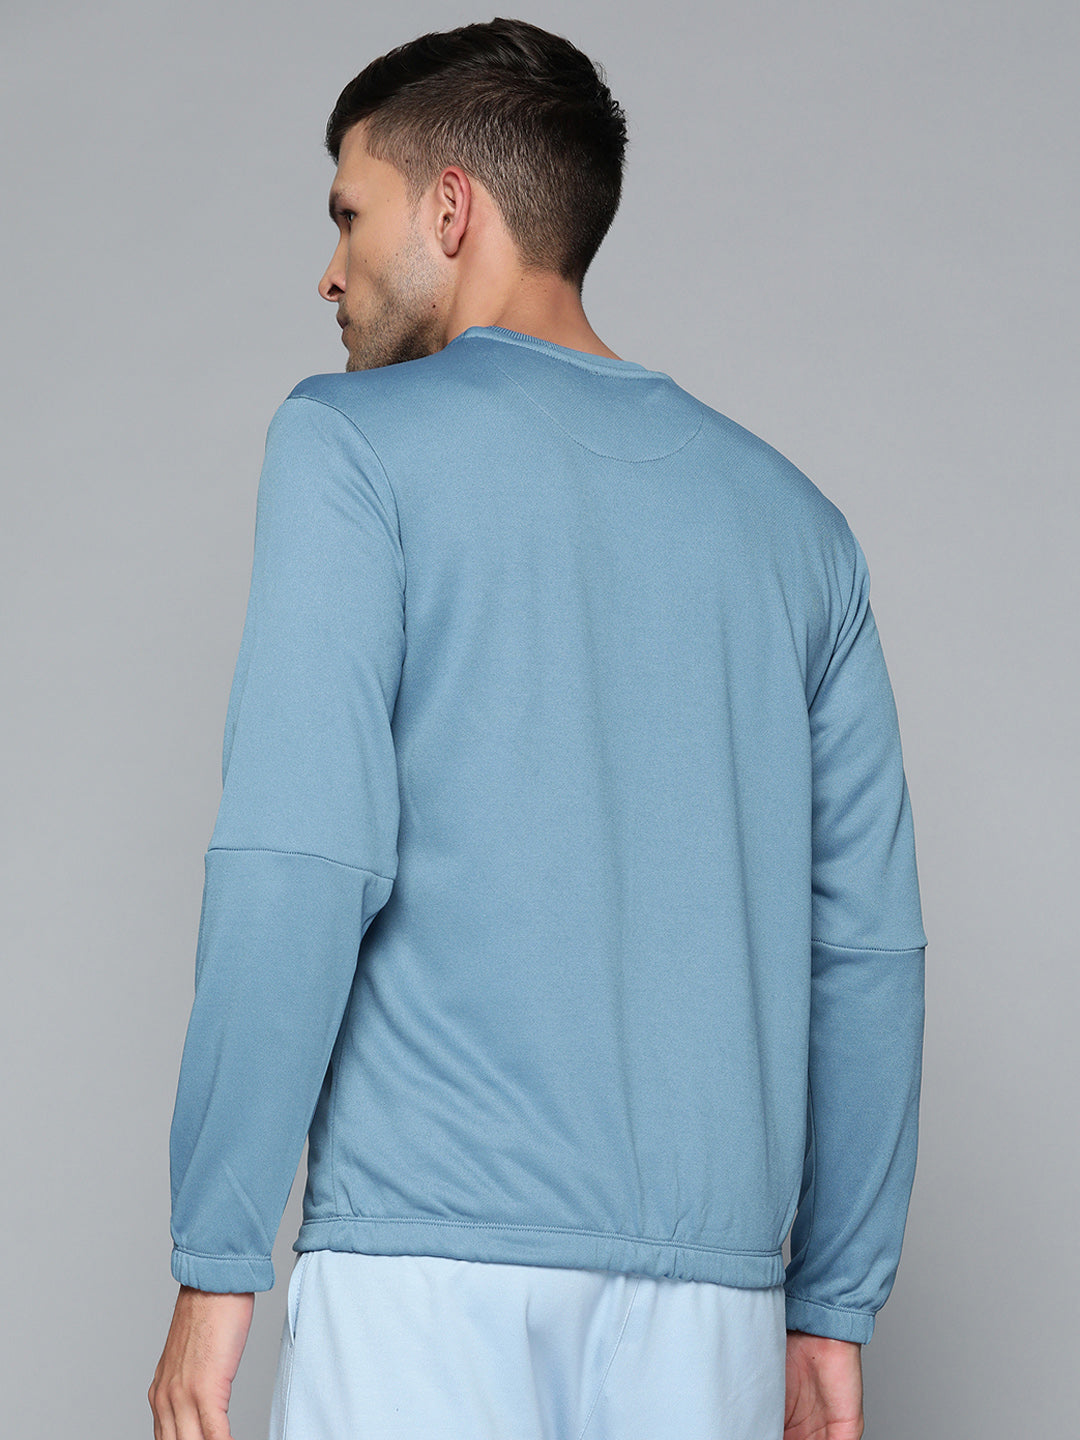 Alcis Men Blue Solid Sweatshirt